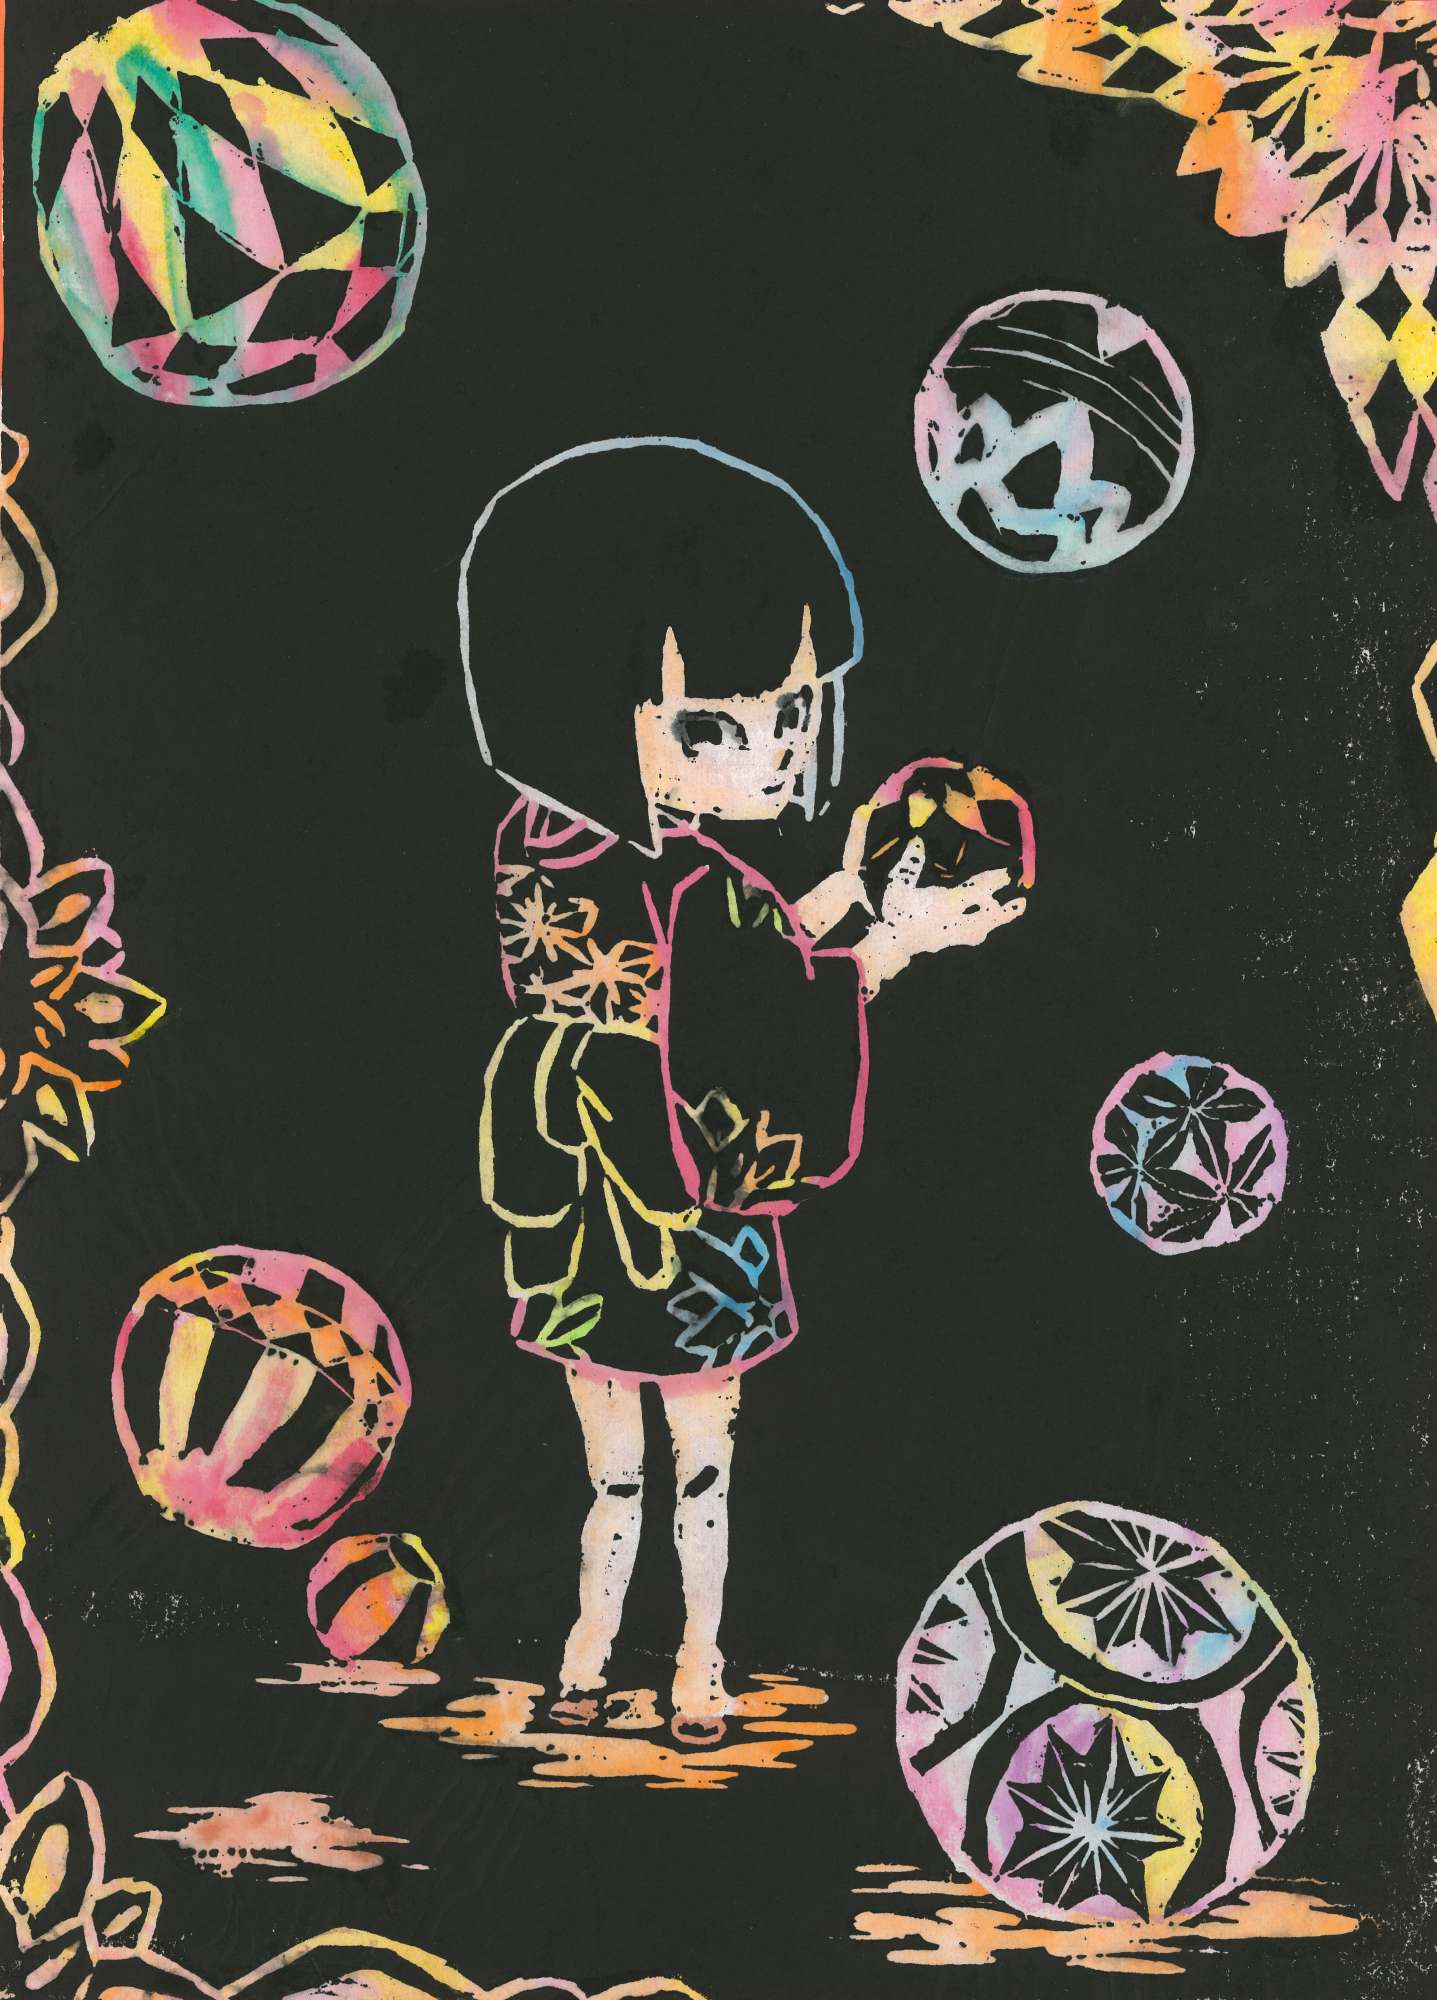 Nagoya Art Exchange 2021 - Japan - Zashiki-warashi and Temari (Mythical child with ball)